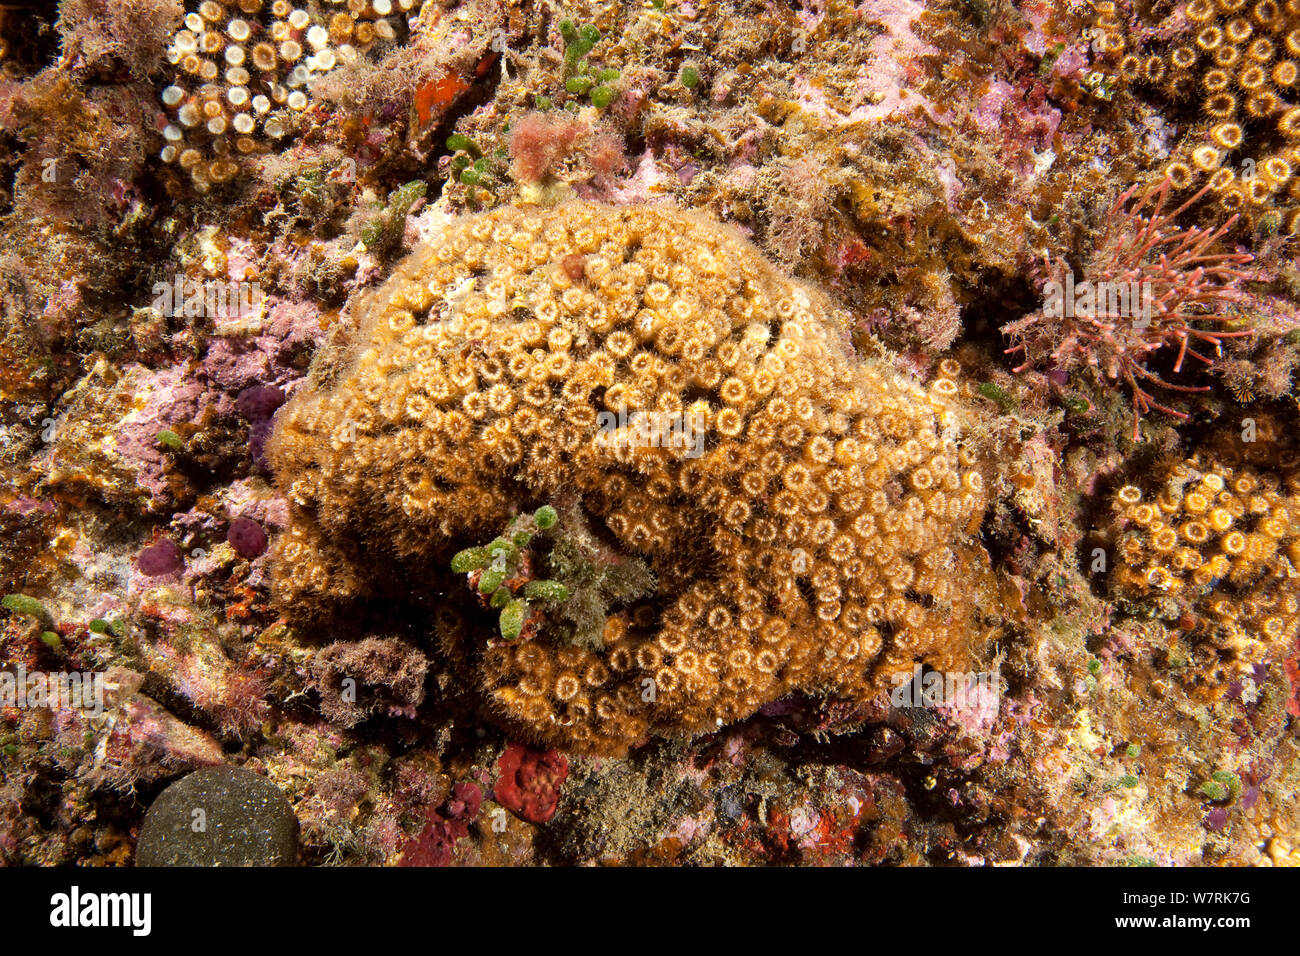 Cuscino corallo (Cladocora caespitosa) Isola d Ischia, Italia, Mar Tirreno, Mediterranea Foto Stock